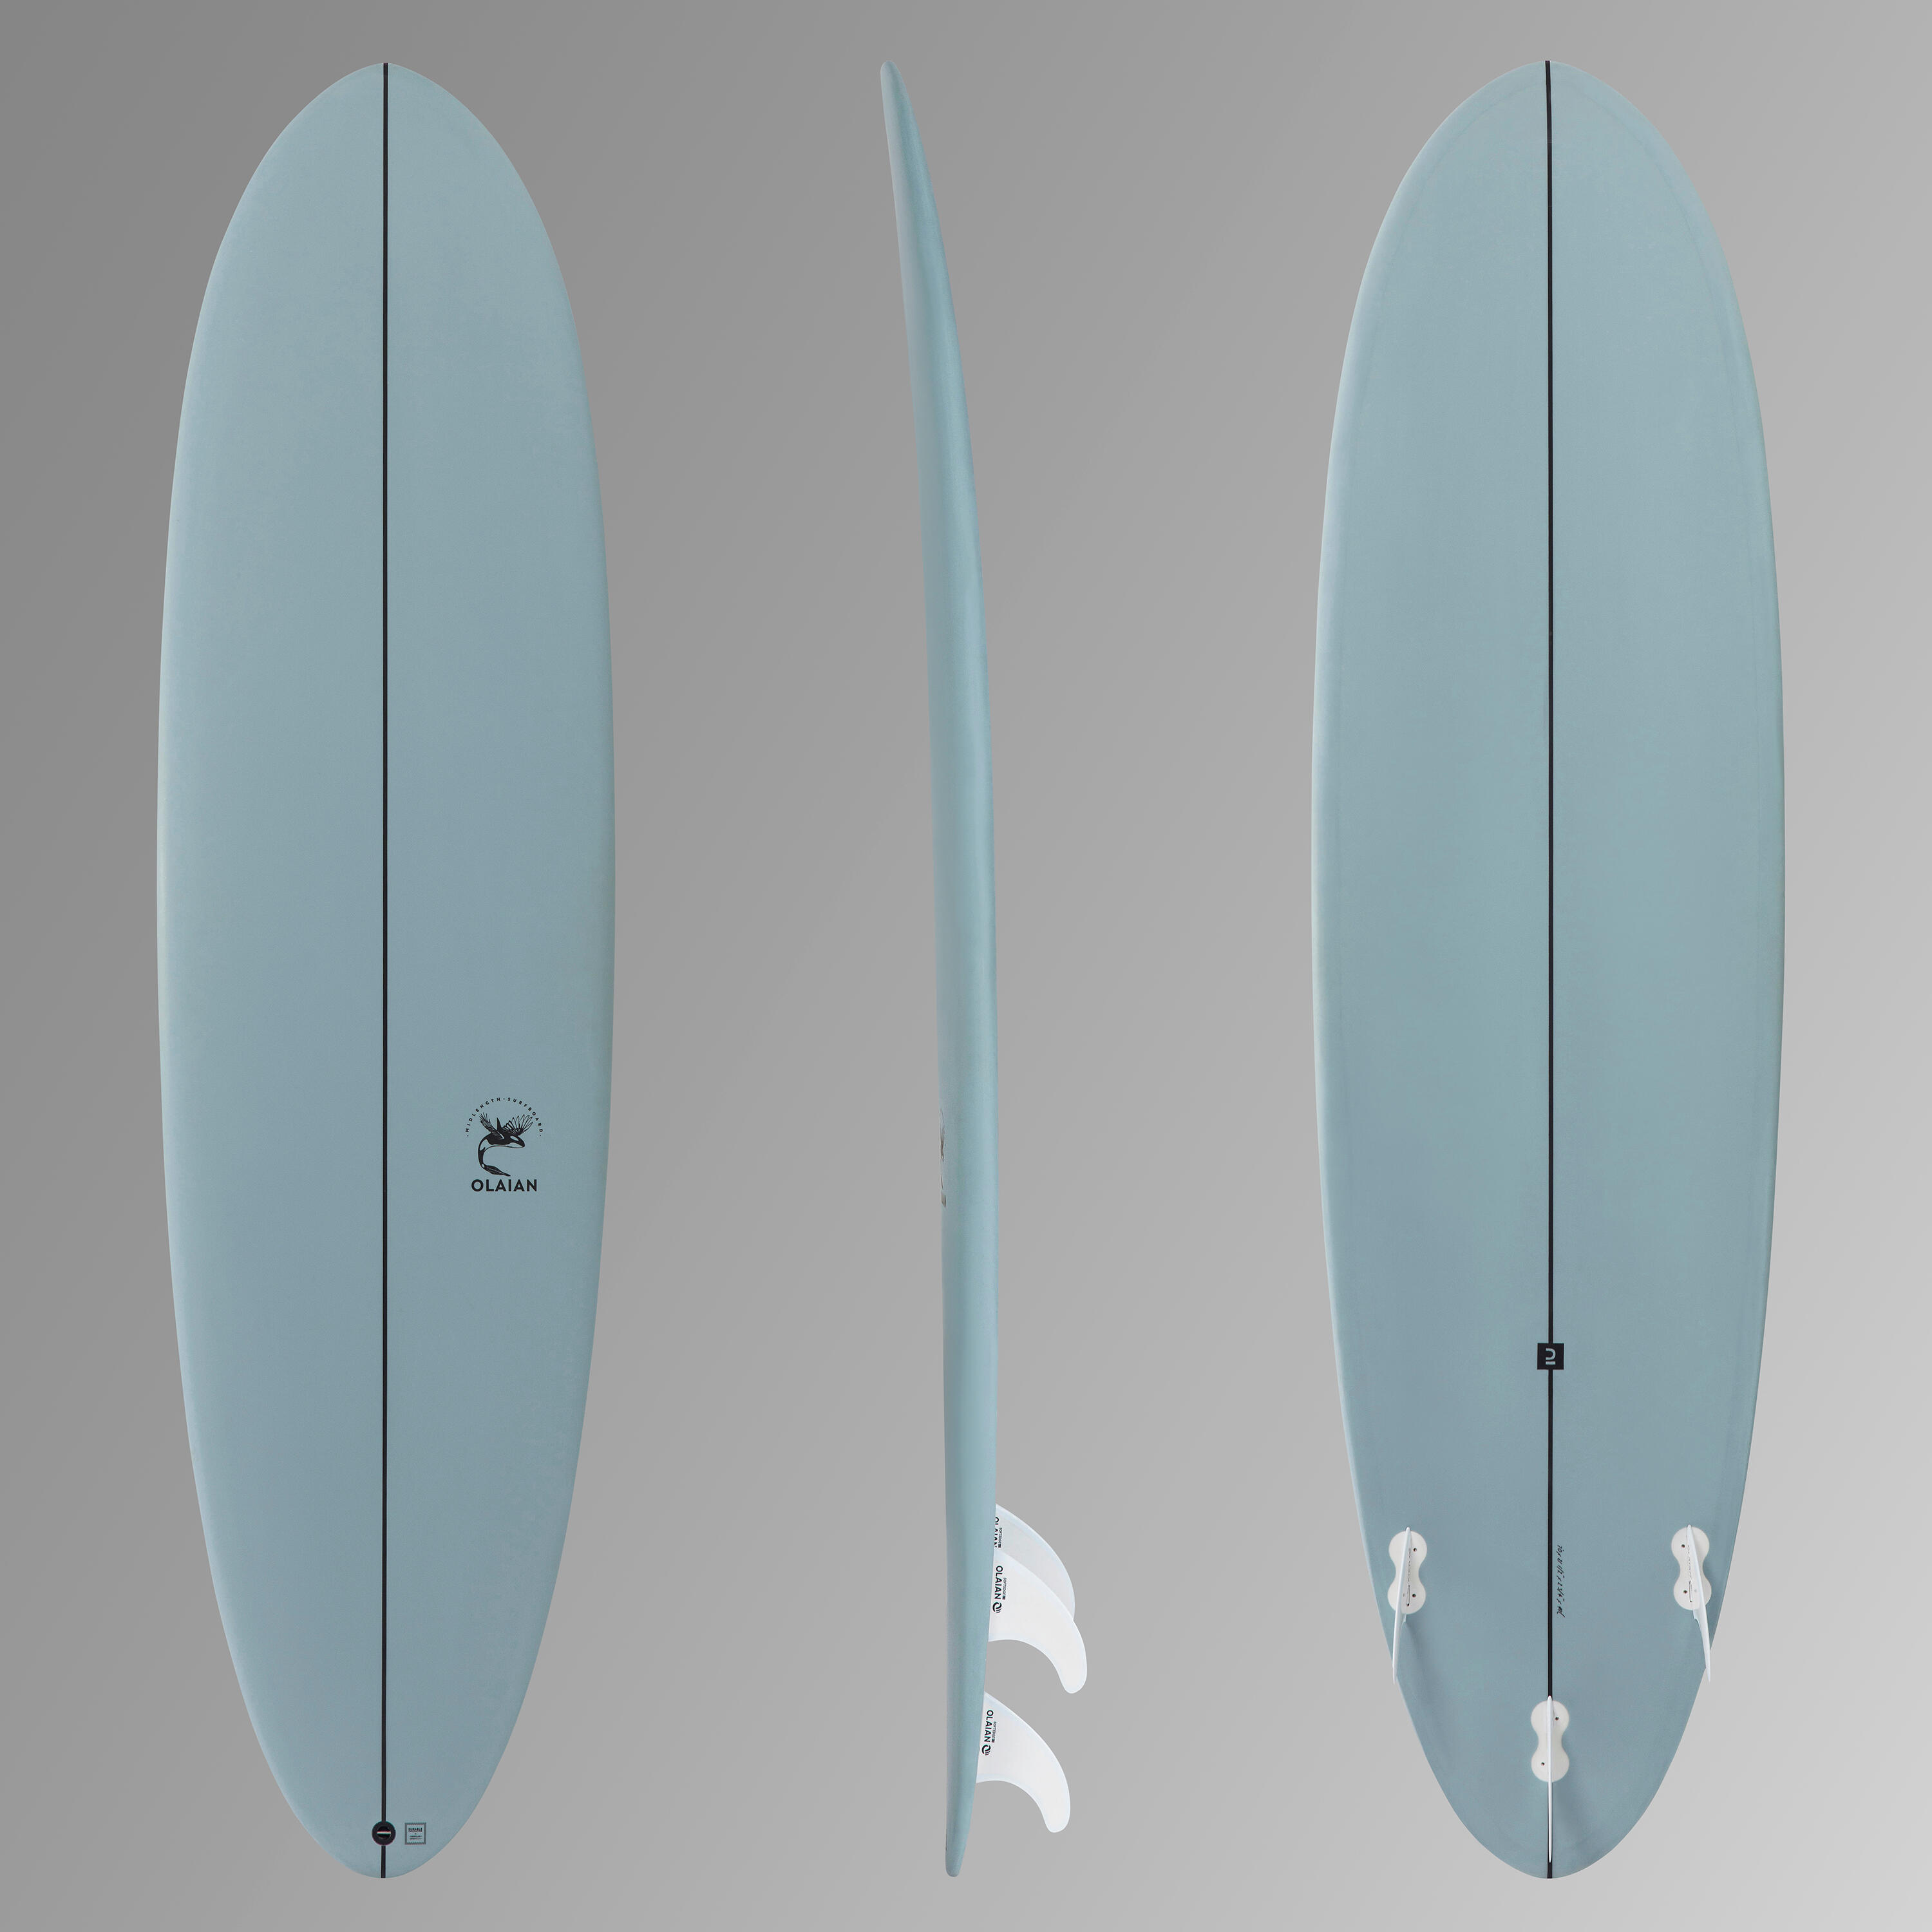 OLAIAN Surfboard Hybrid 500 7' 49 L EINHEITSGRÖSSE